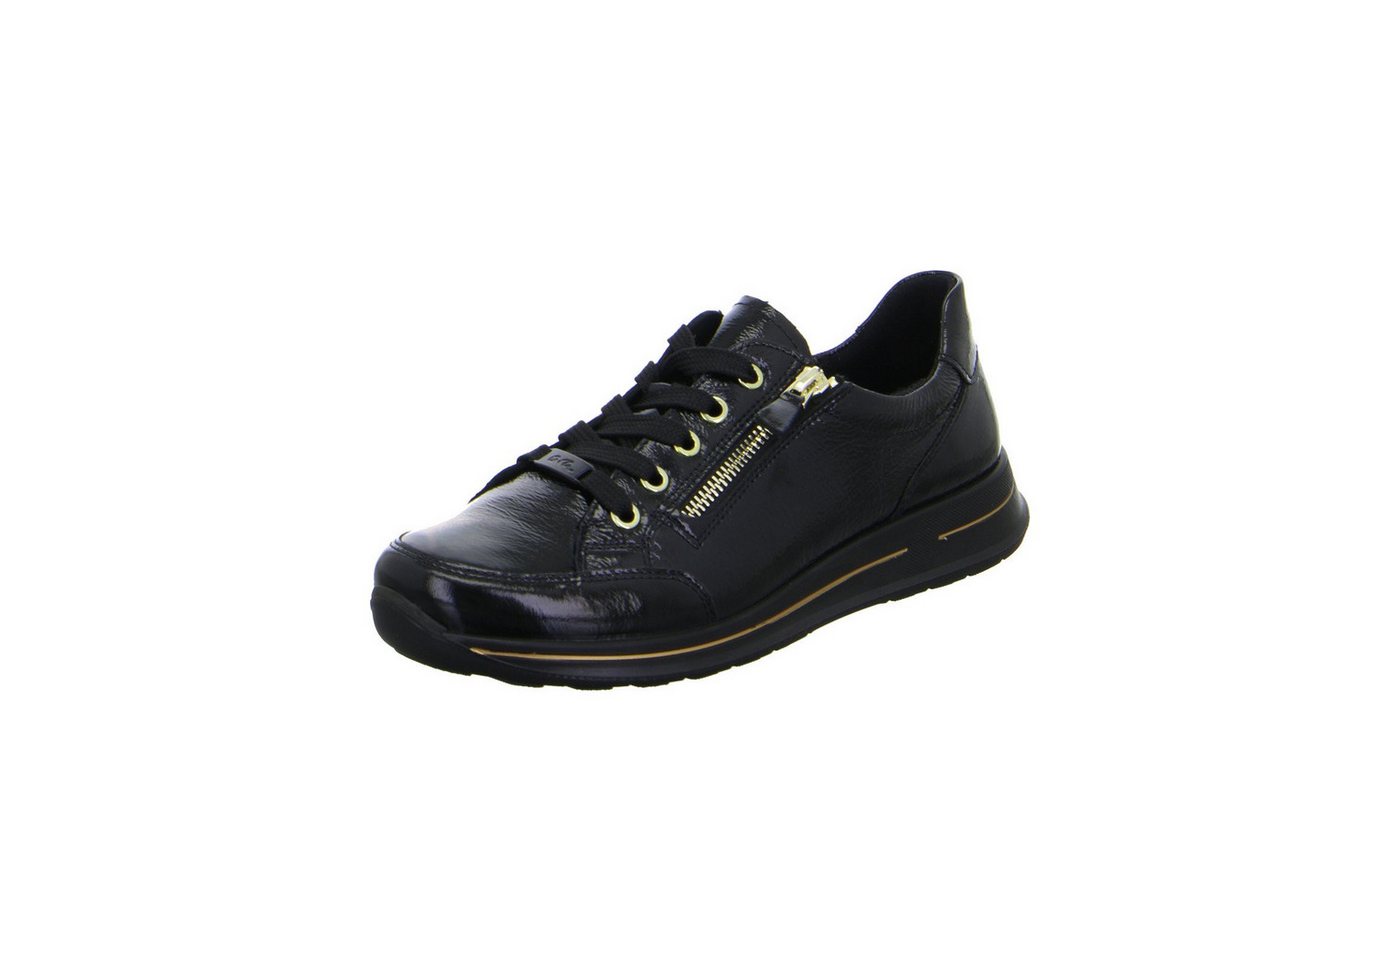 Ara Osaka - Damen Schuhe Sneaker Schnürer Lackleder schwarz von Ara